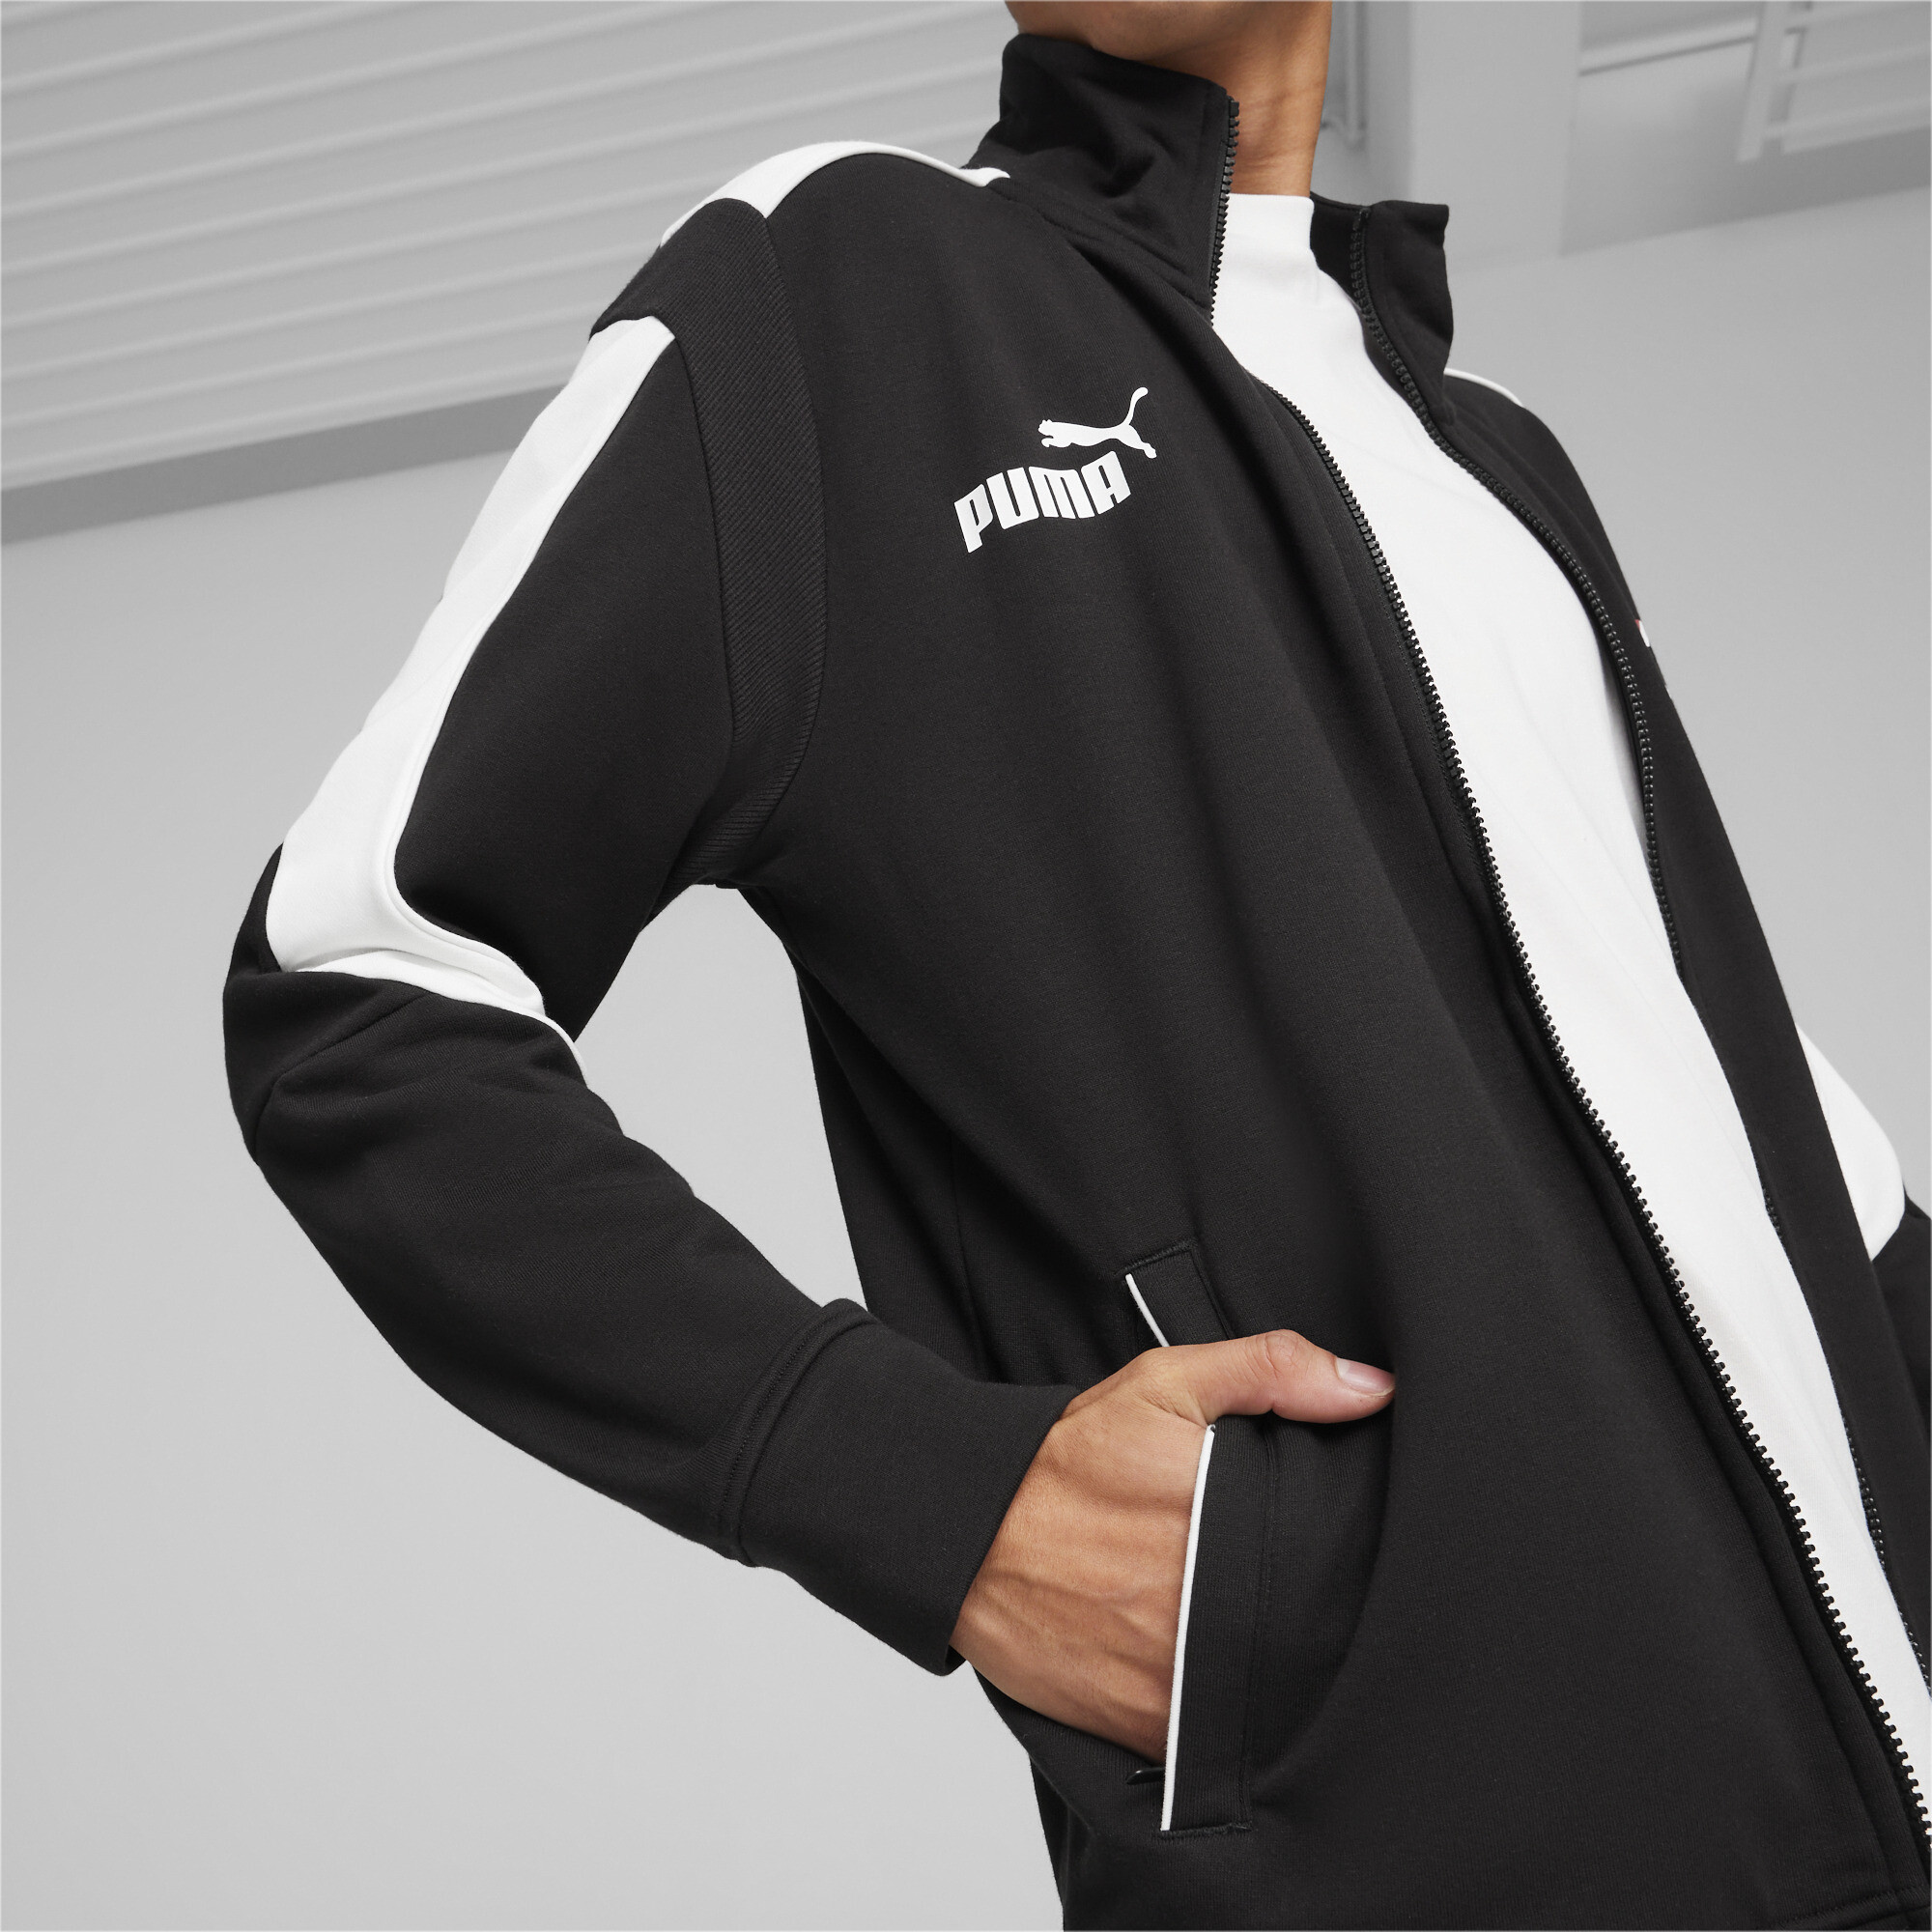 Men's PUMA BMW M Motorsport MT7+ Sweat Jacket In Black, Size XL